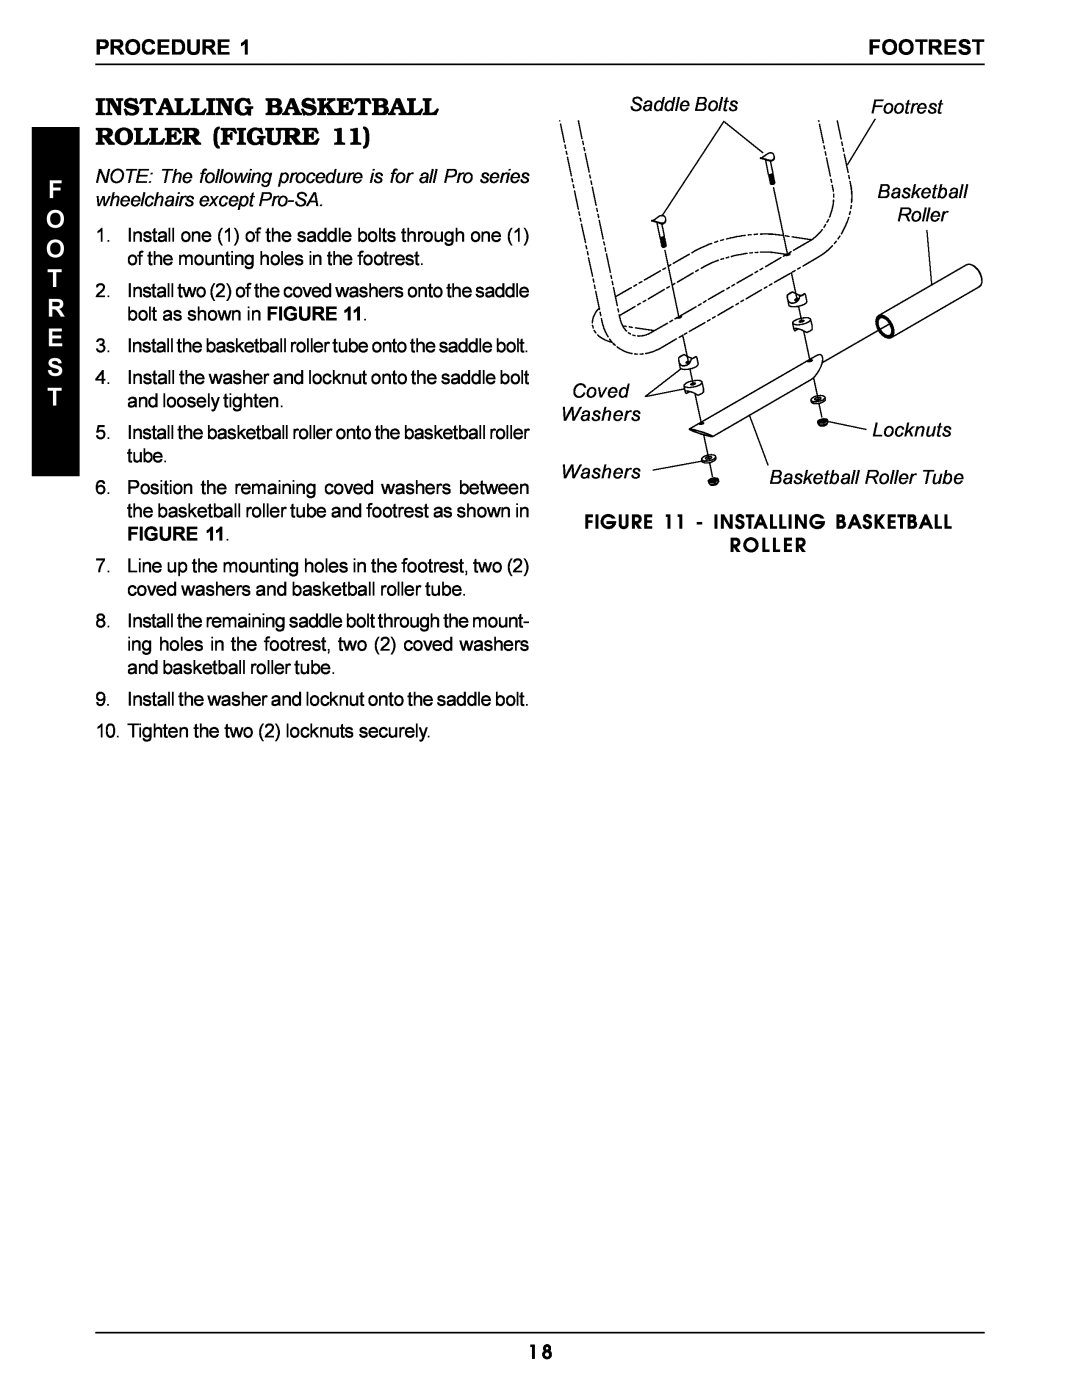 Invacare Pro Series manual Installing Basketball Roller Figure, F O O T R E S T, Procedure, Footrest 